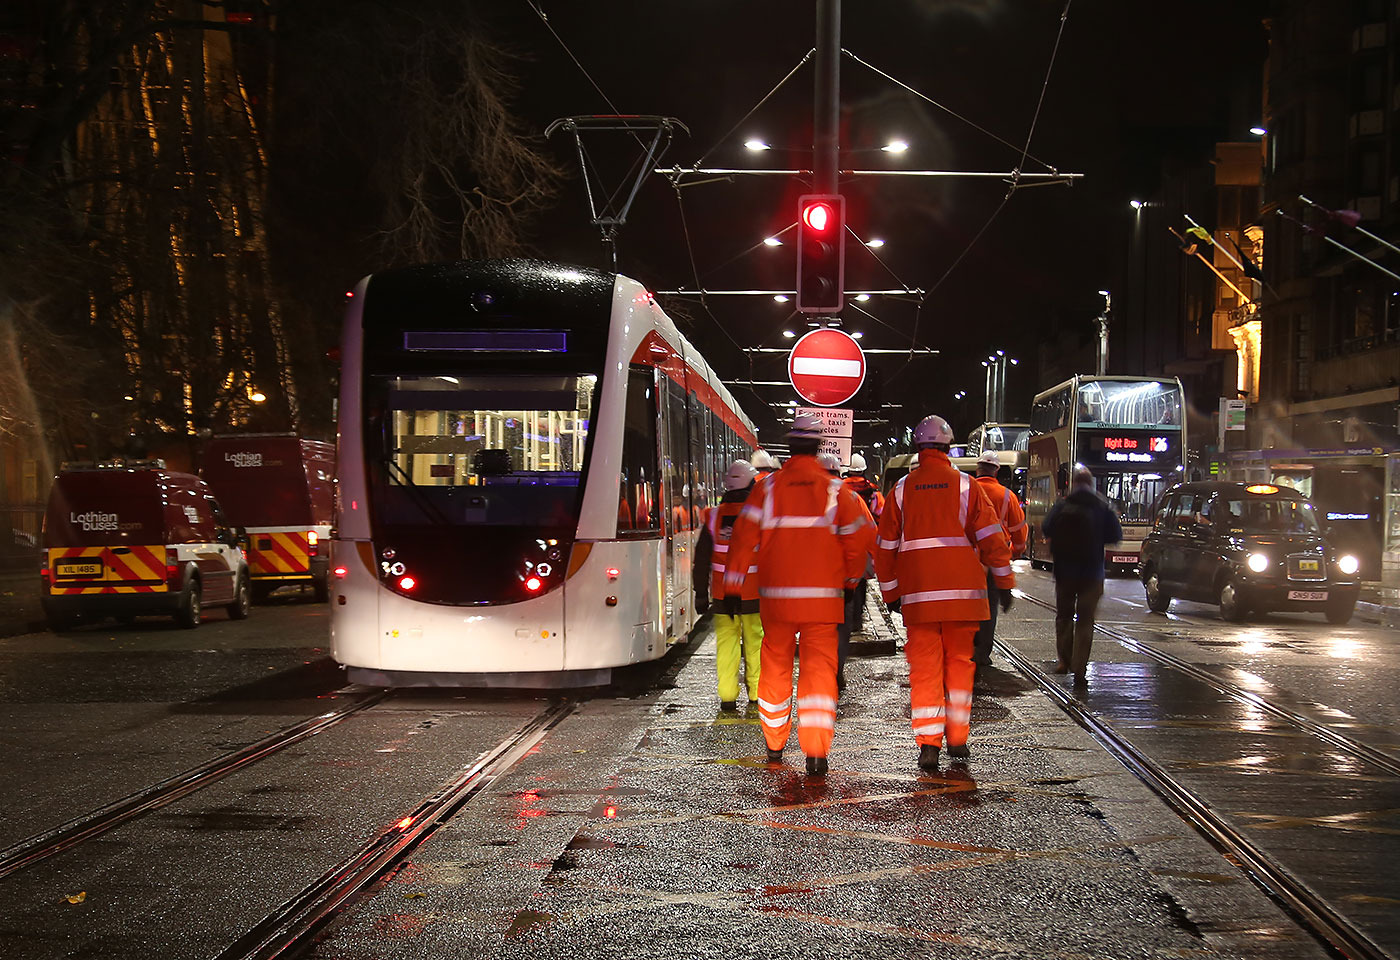 Tram Testing on December 5, 2013  -  Tram passing The Scott Monument, Princes Street